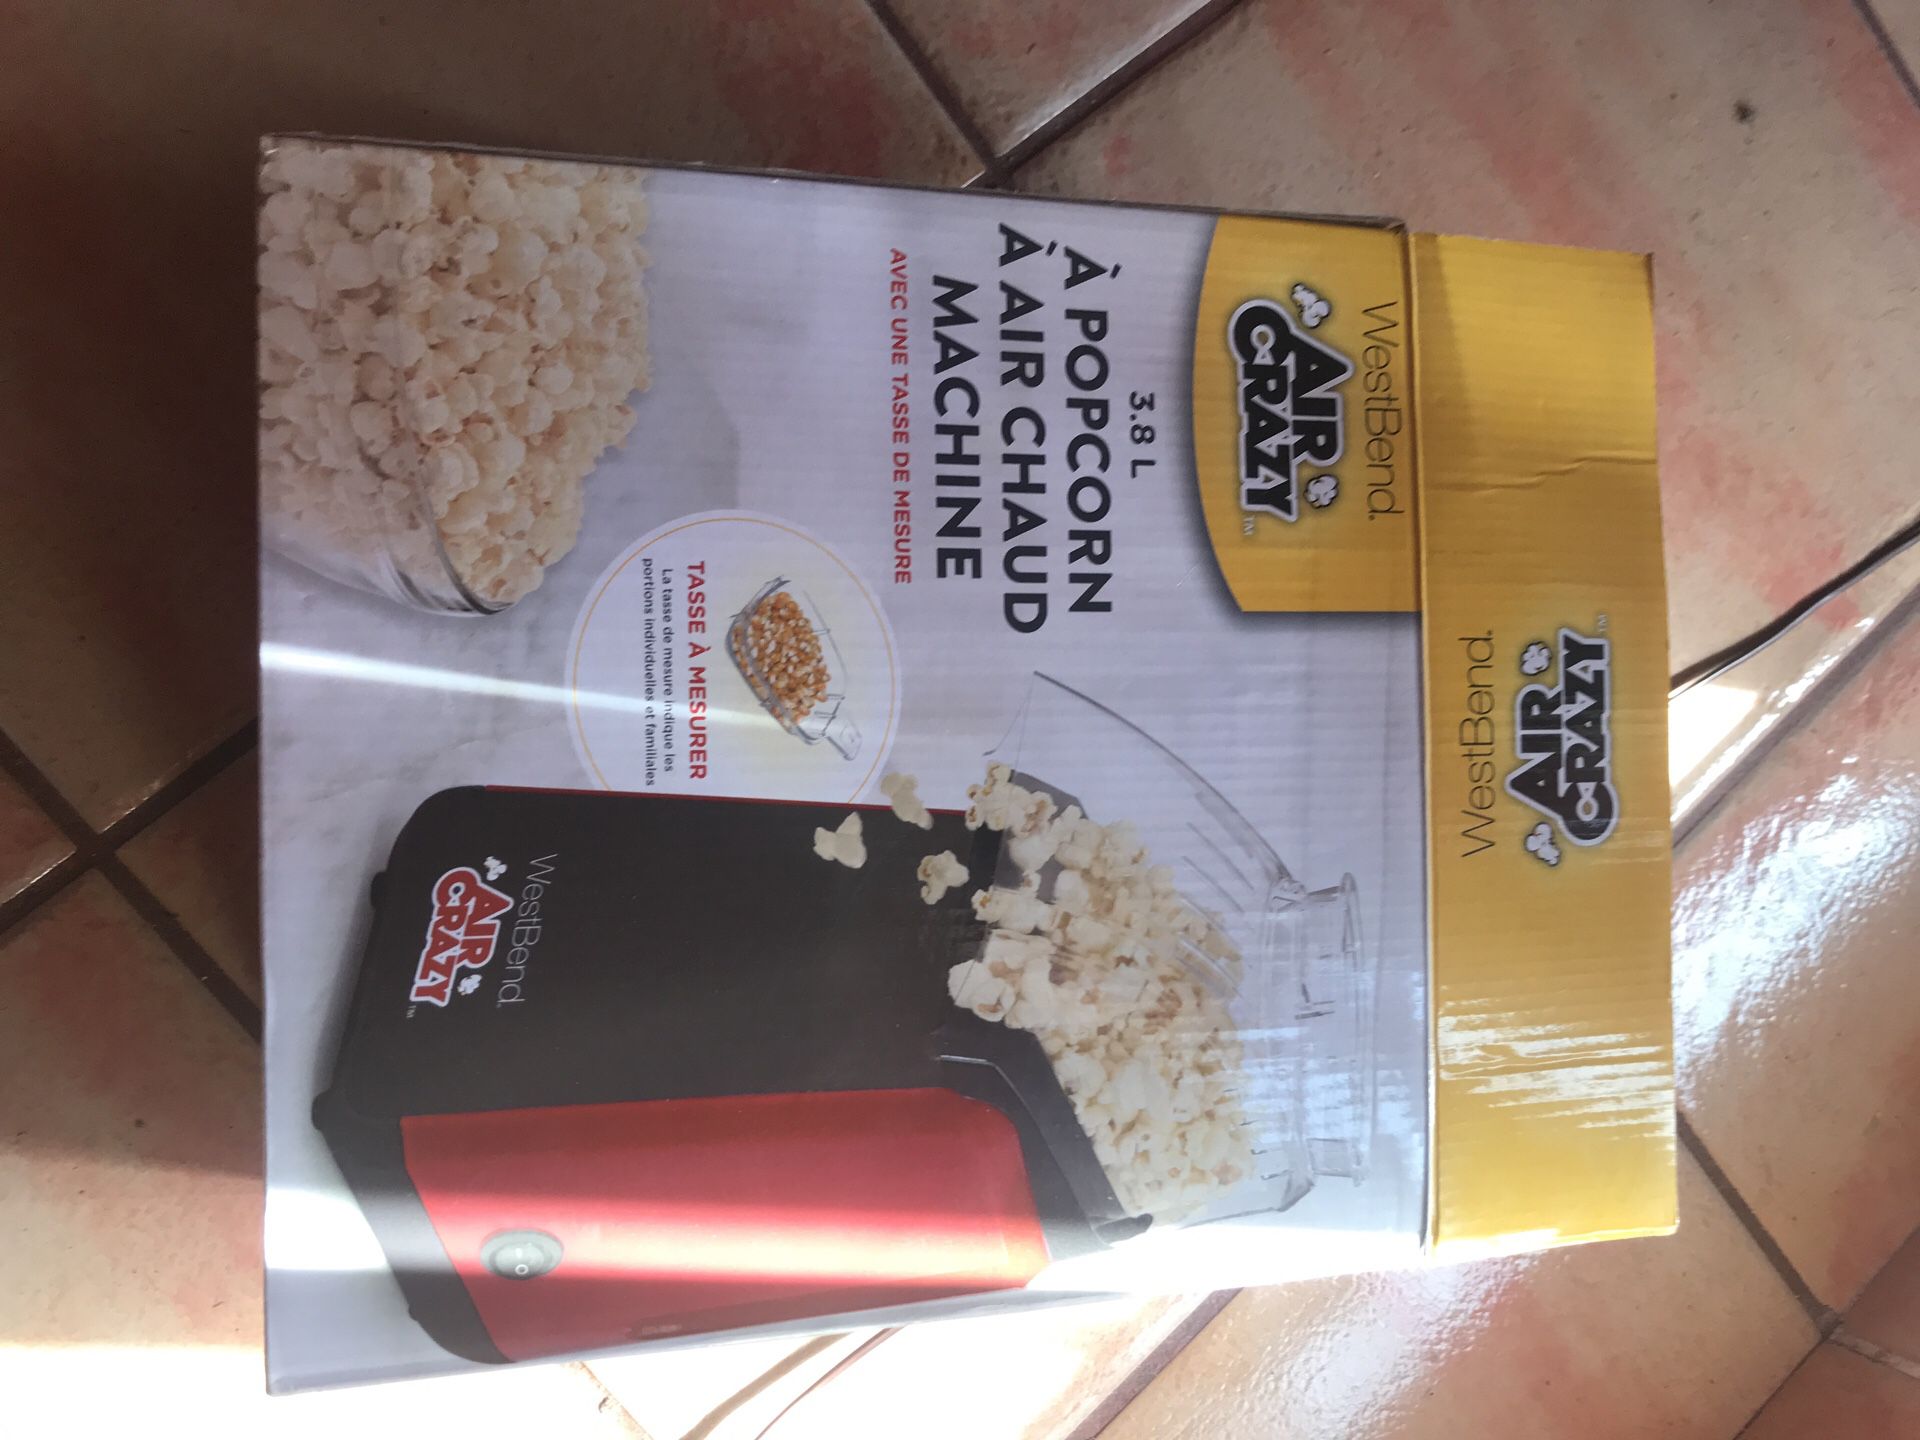 Popcorn air popper